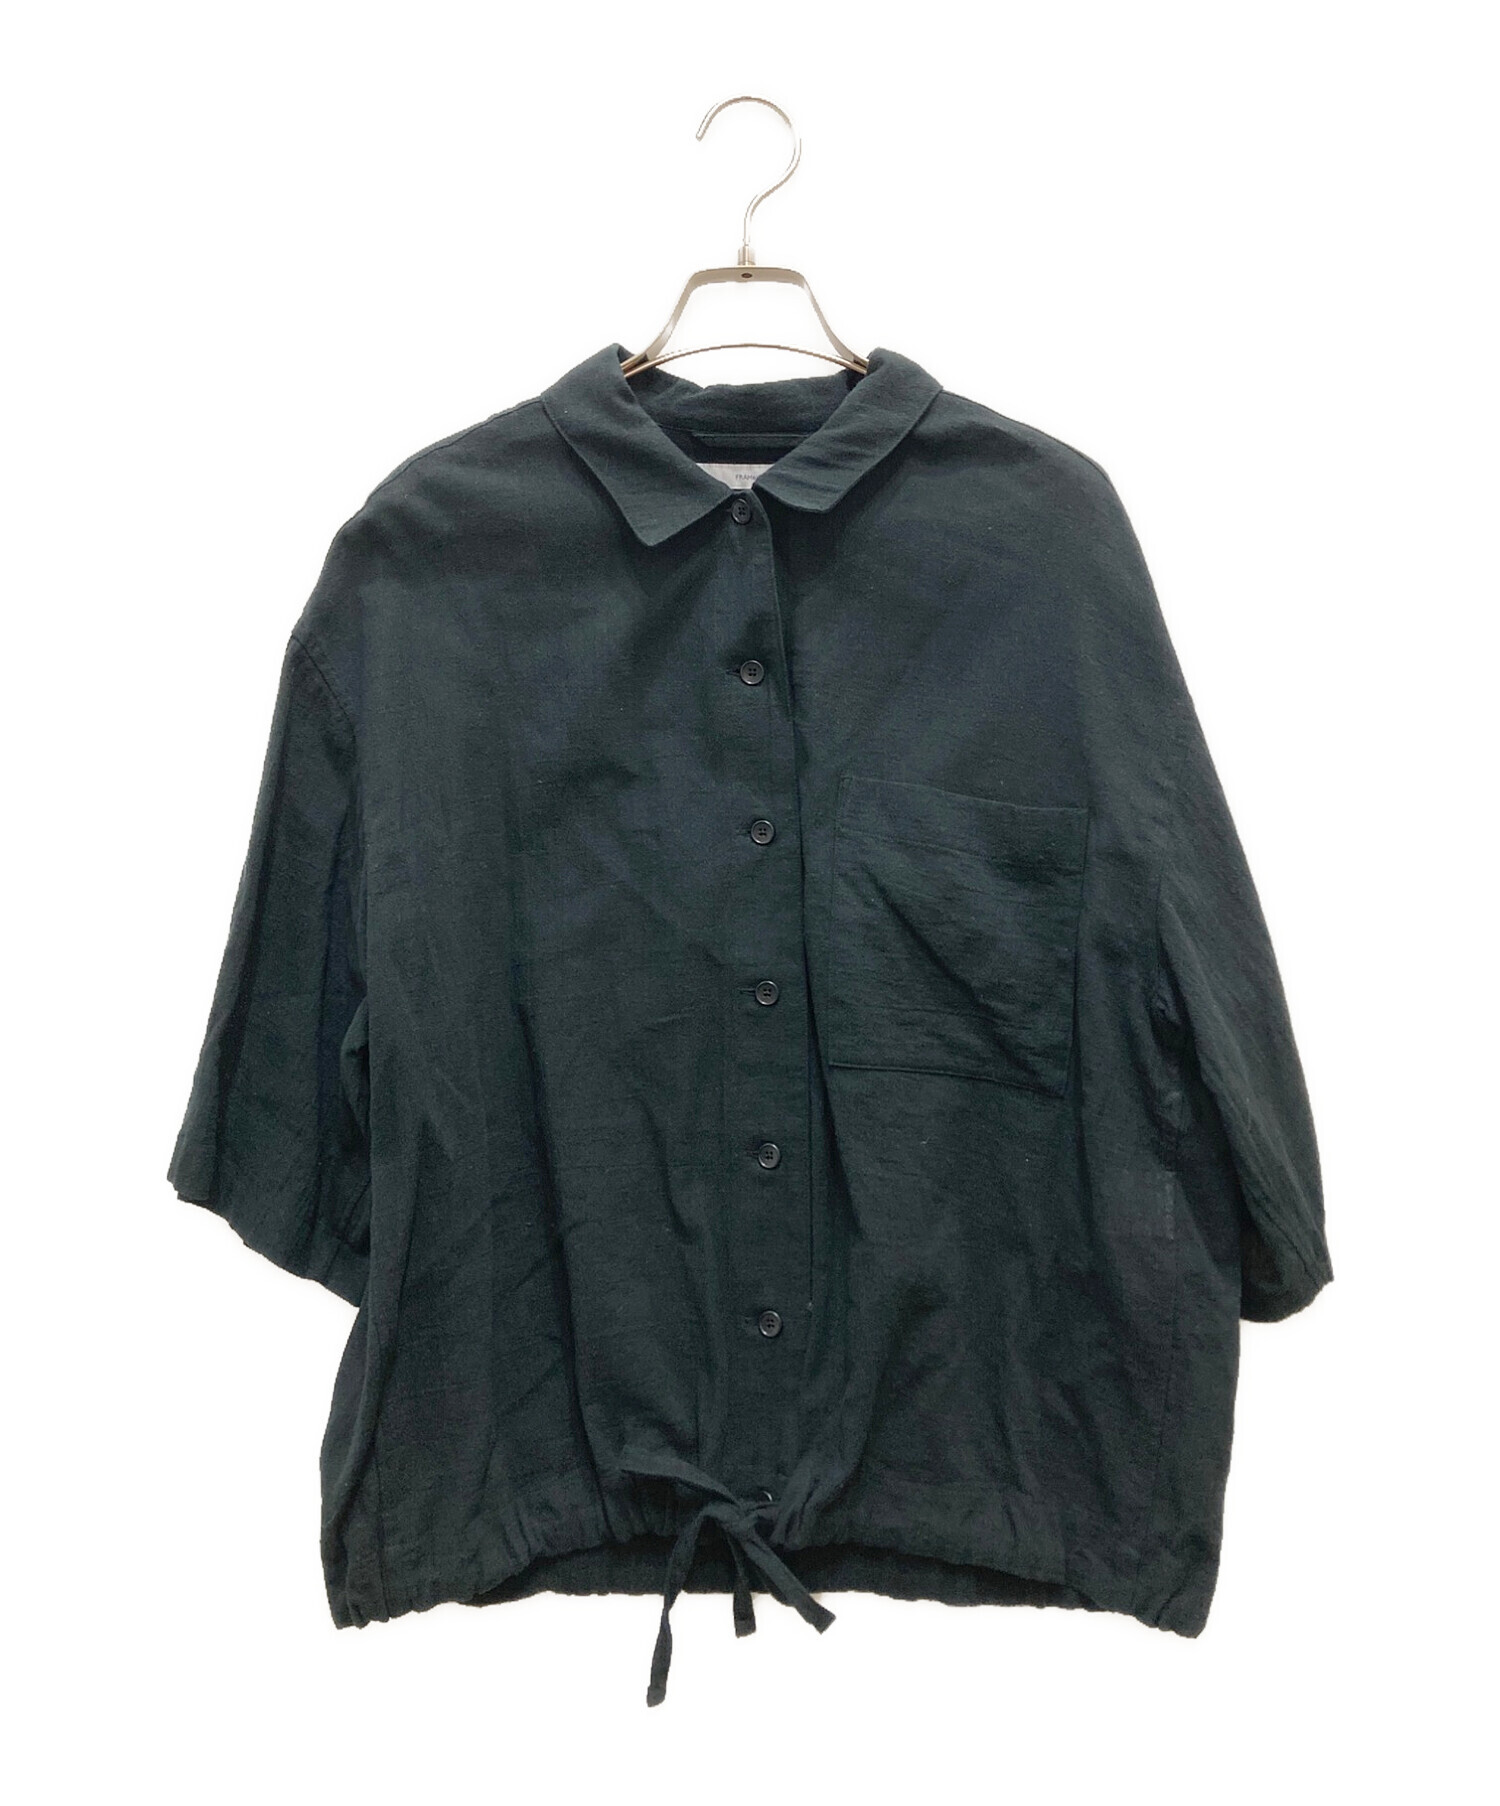 FRAMeWORK (フレームワーク) チリメンボイル裾ドロストシャツ ブラック サイズ:表記無し(実寸サイズをご参照下さい)